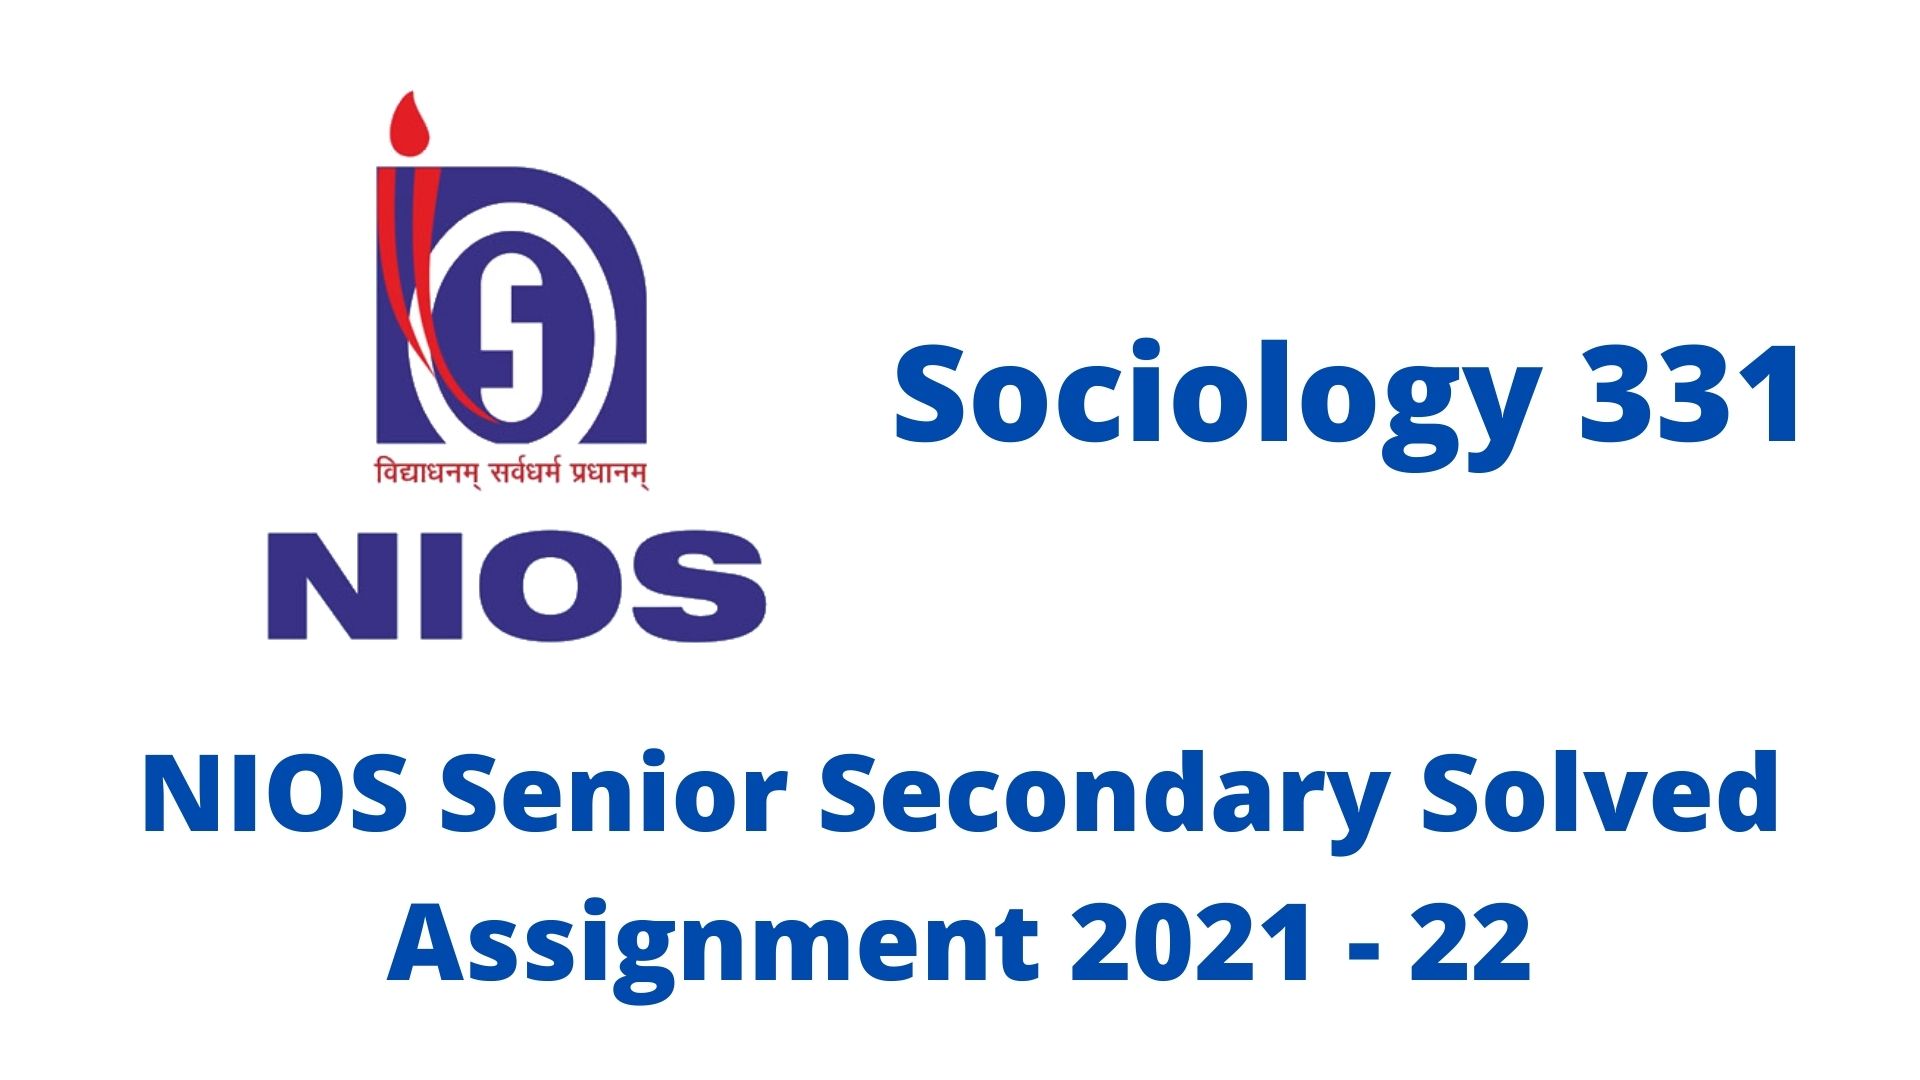 nios sociology assignment